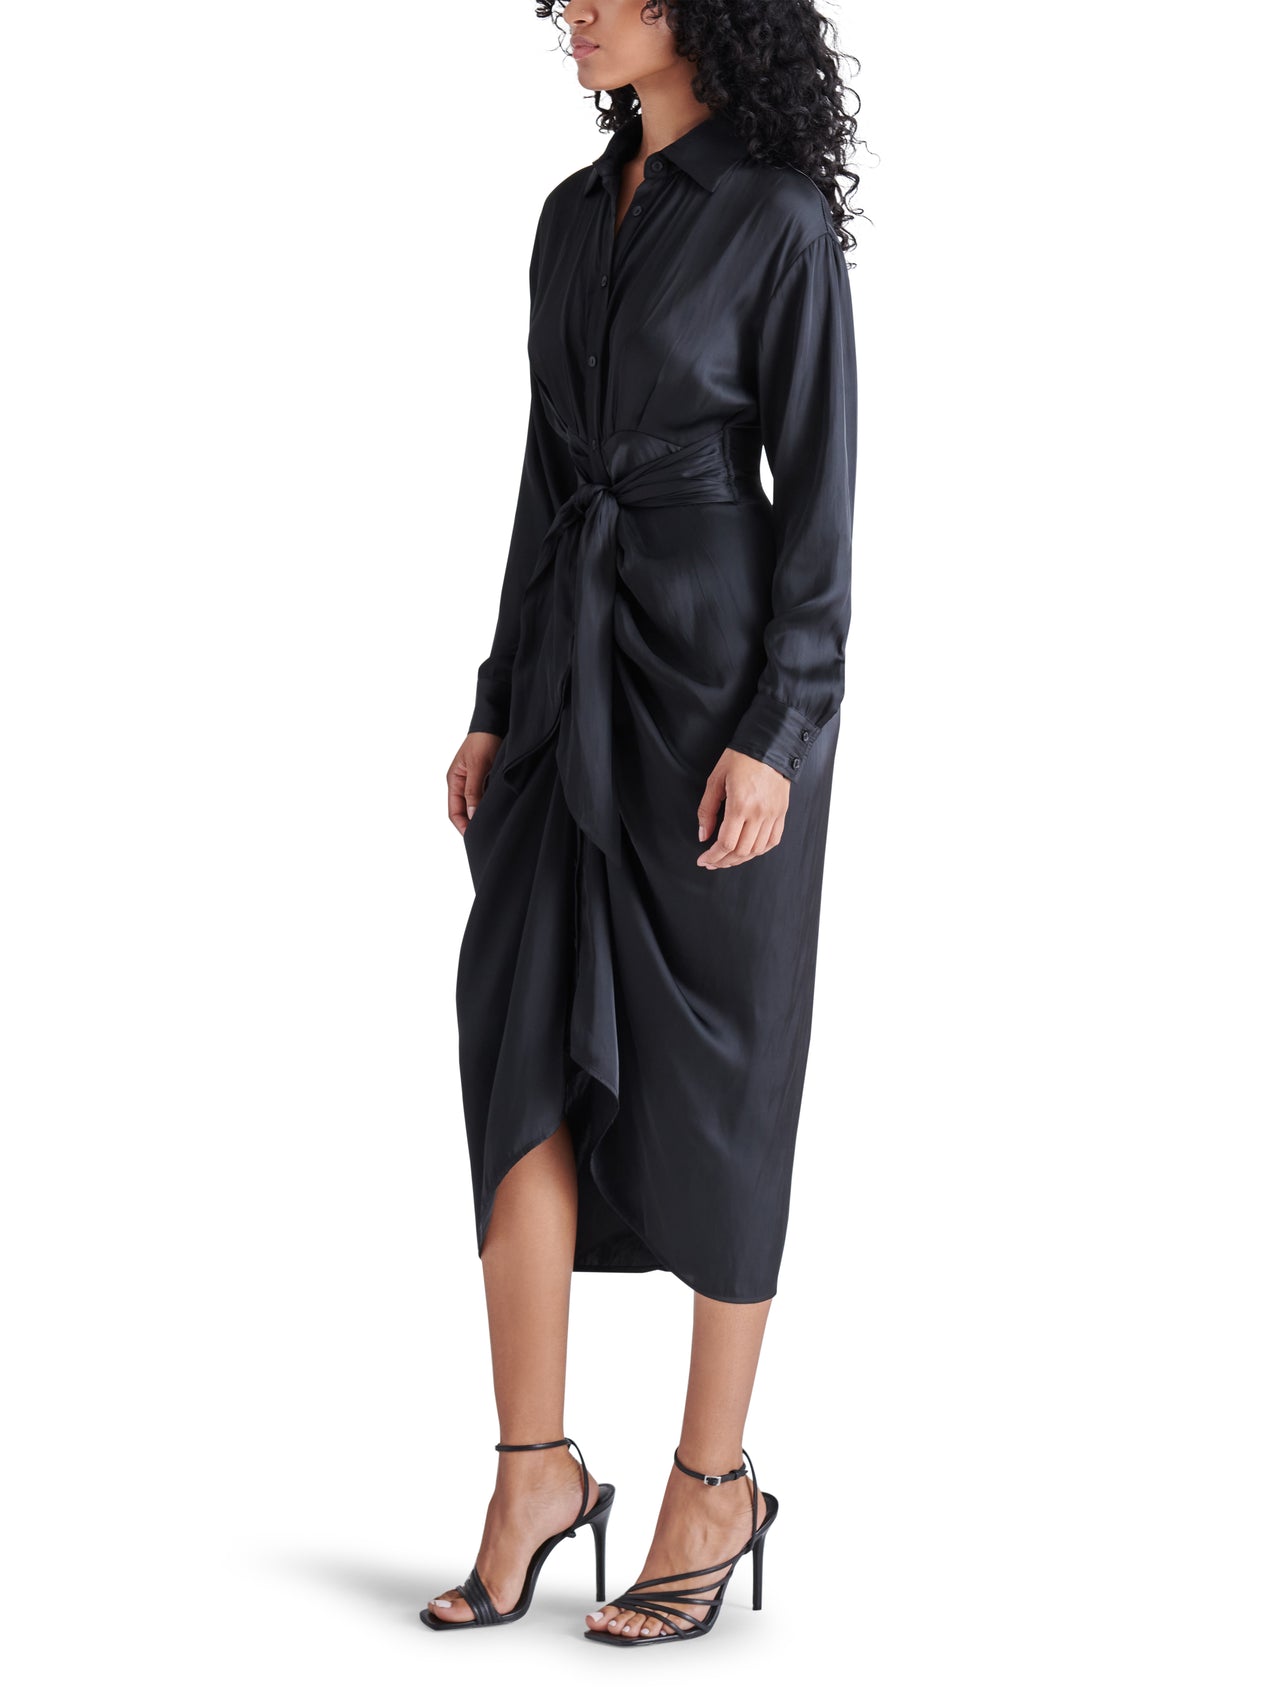 Sula Dress Black,  by Steve Madden | LIT Boutique